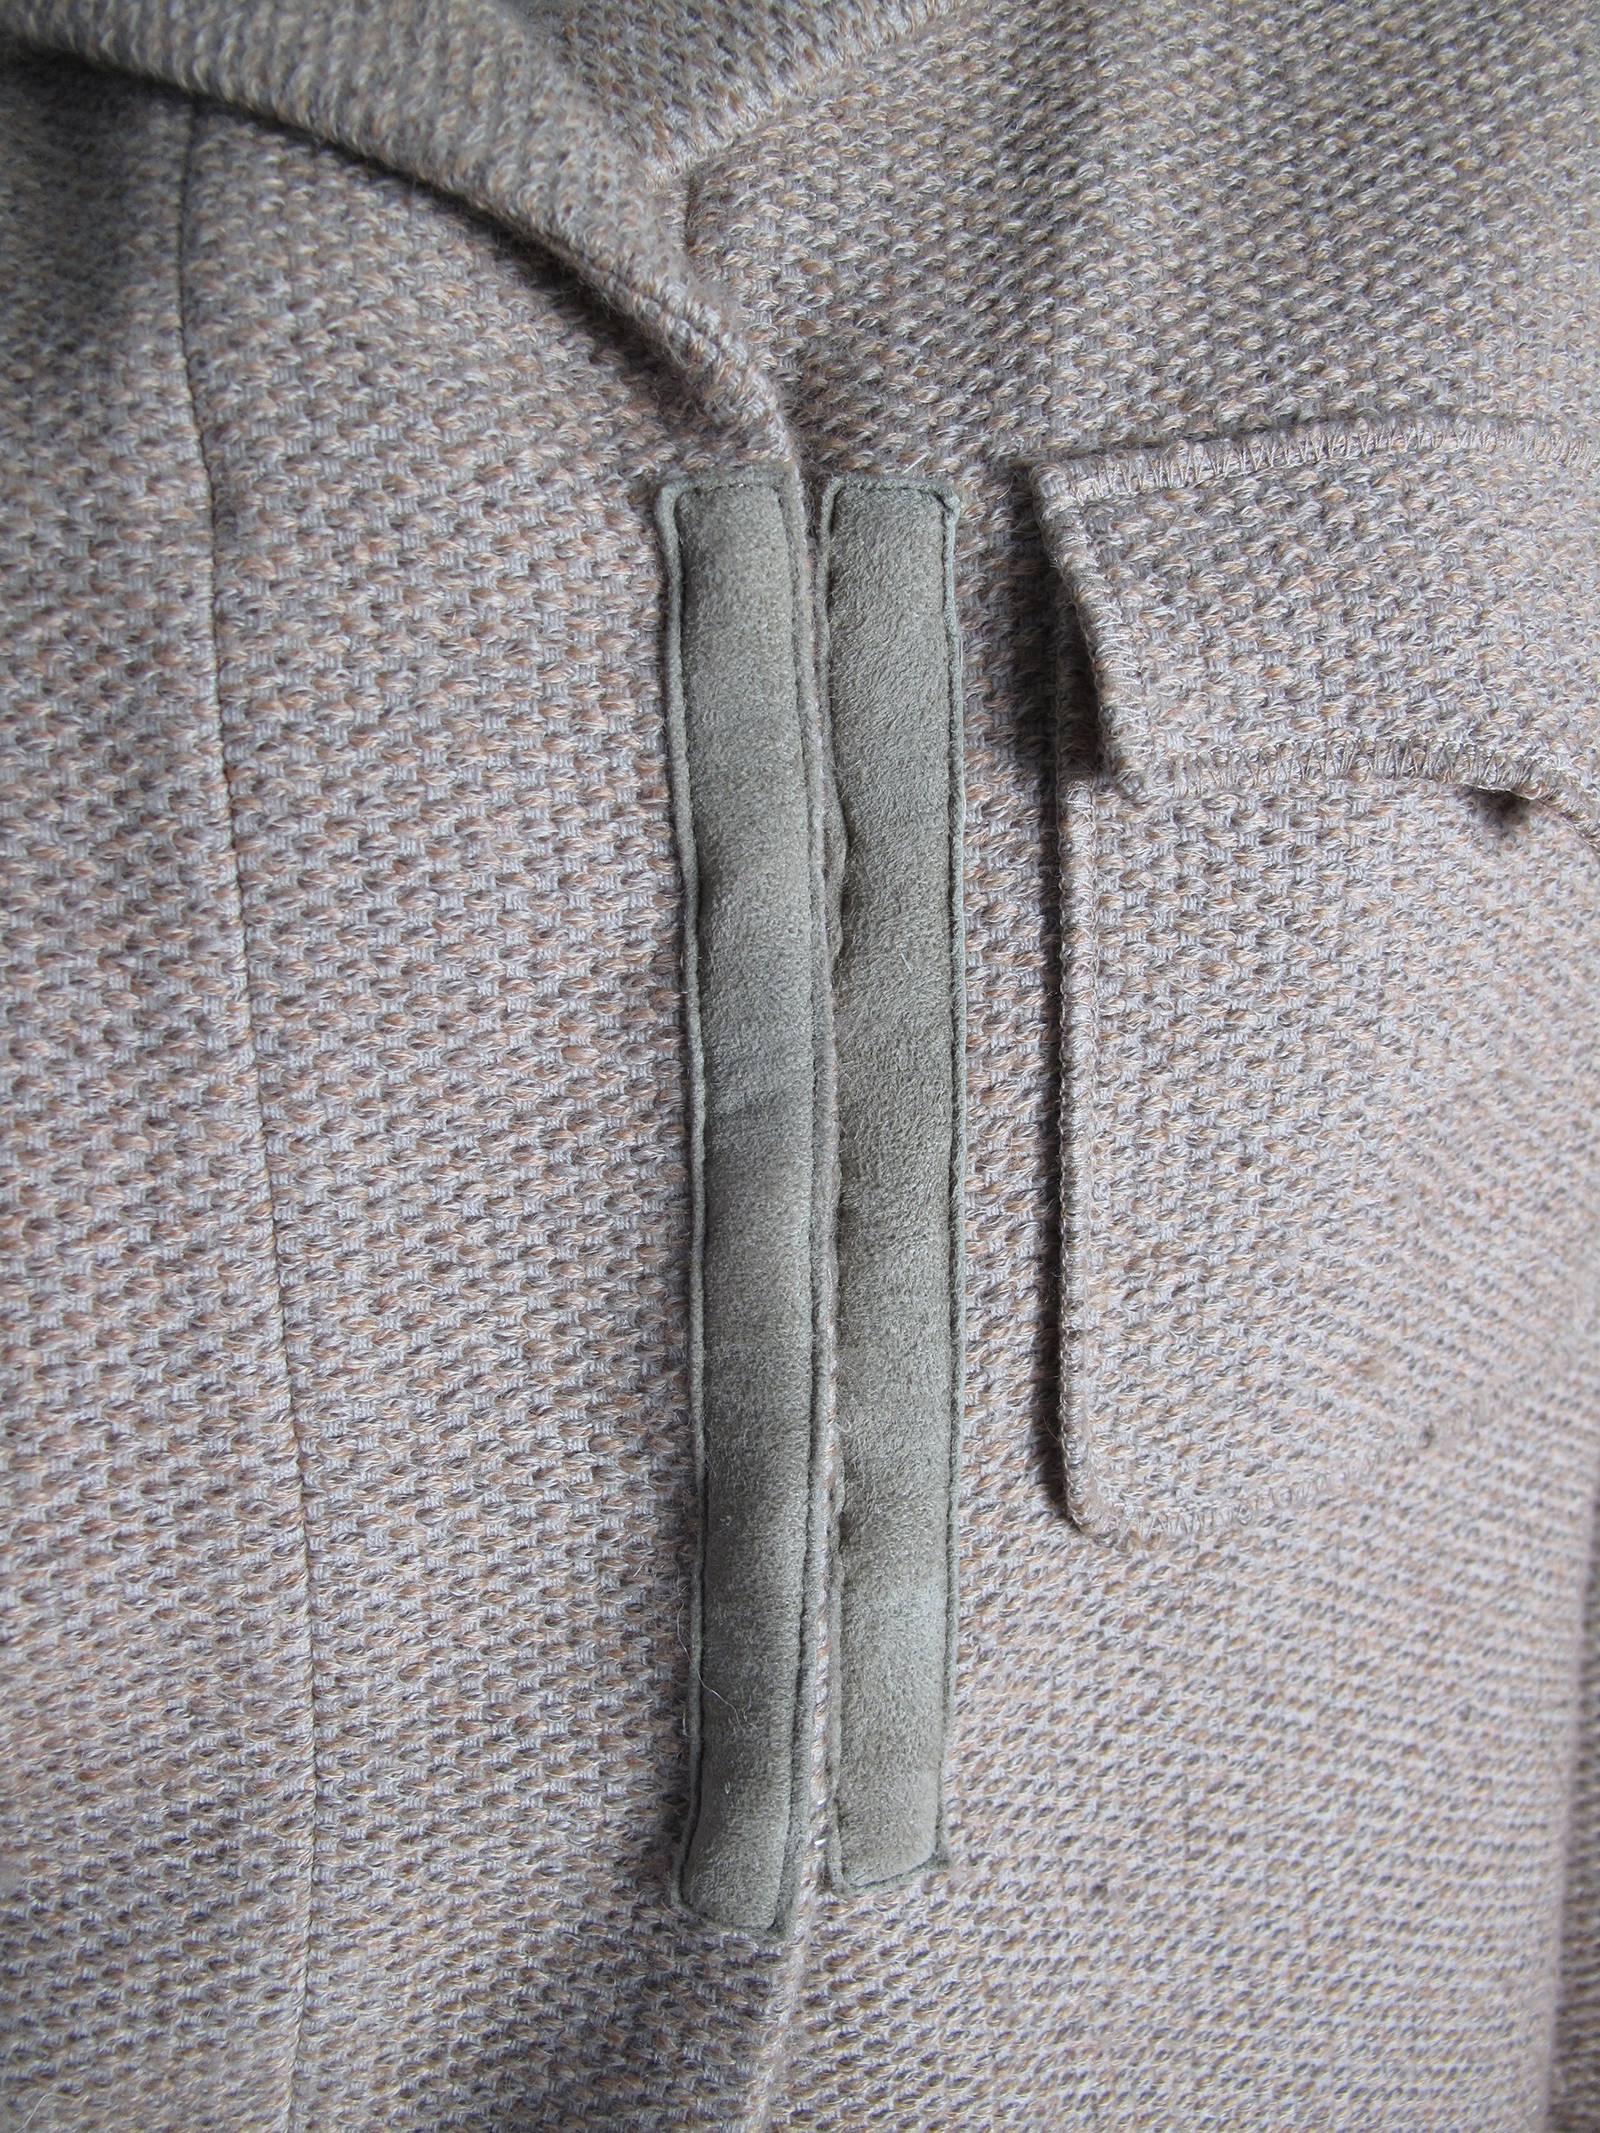 Brown Chanel wool and alpaca short Jacket, 1999  